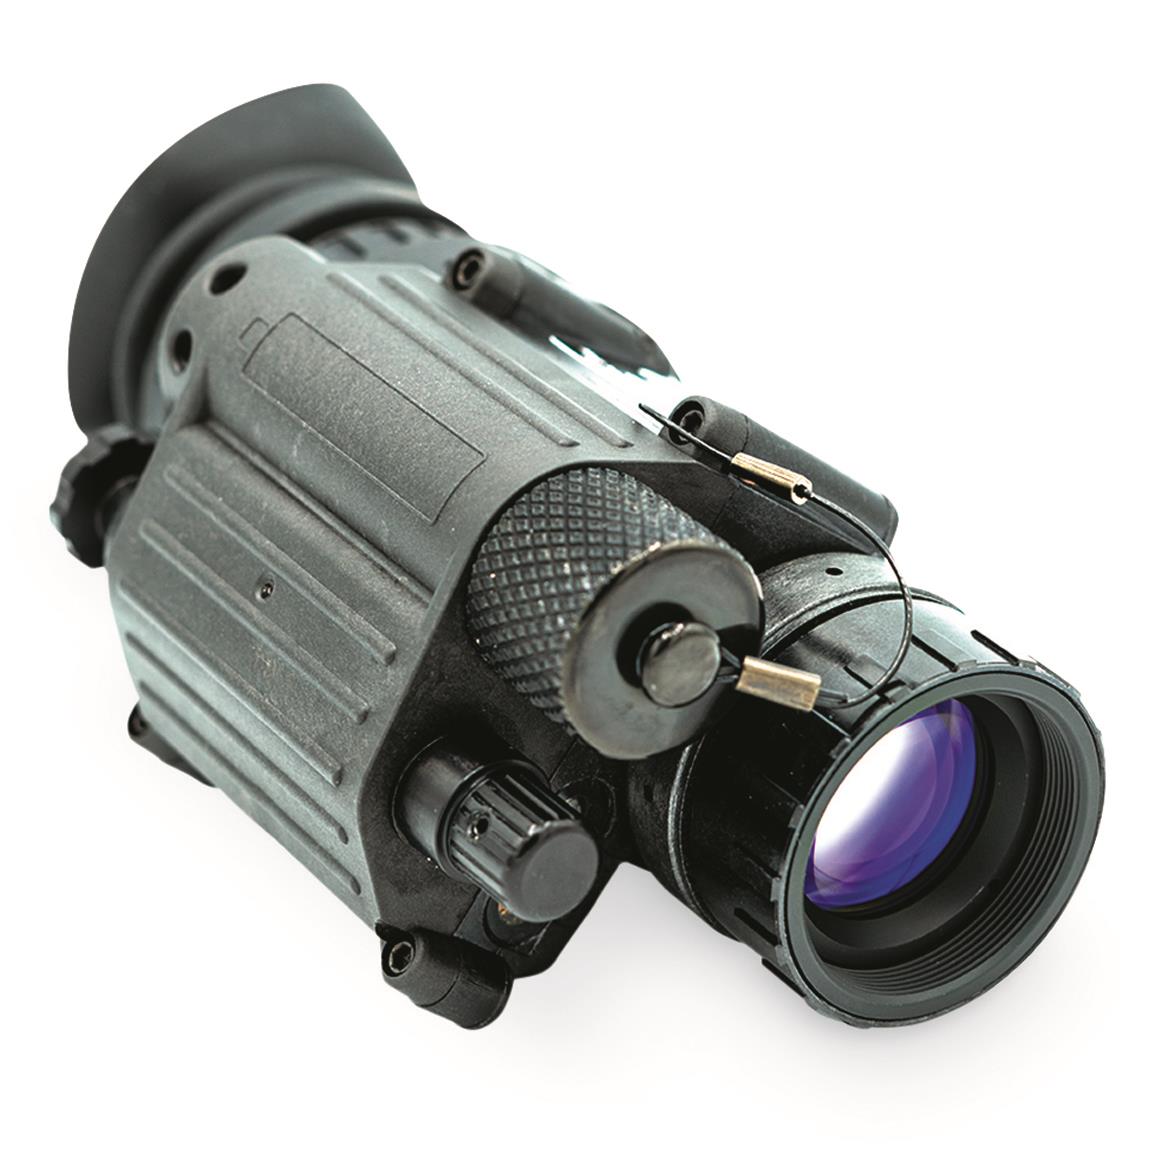 Armasight PVS-14 Pinnacle Gen 3 Ghost Multi-Purpose Night Vision Monocular